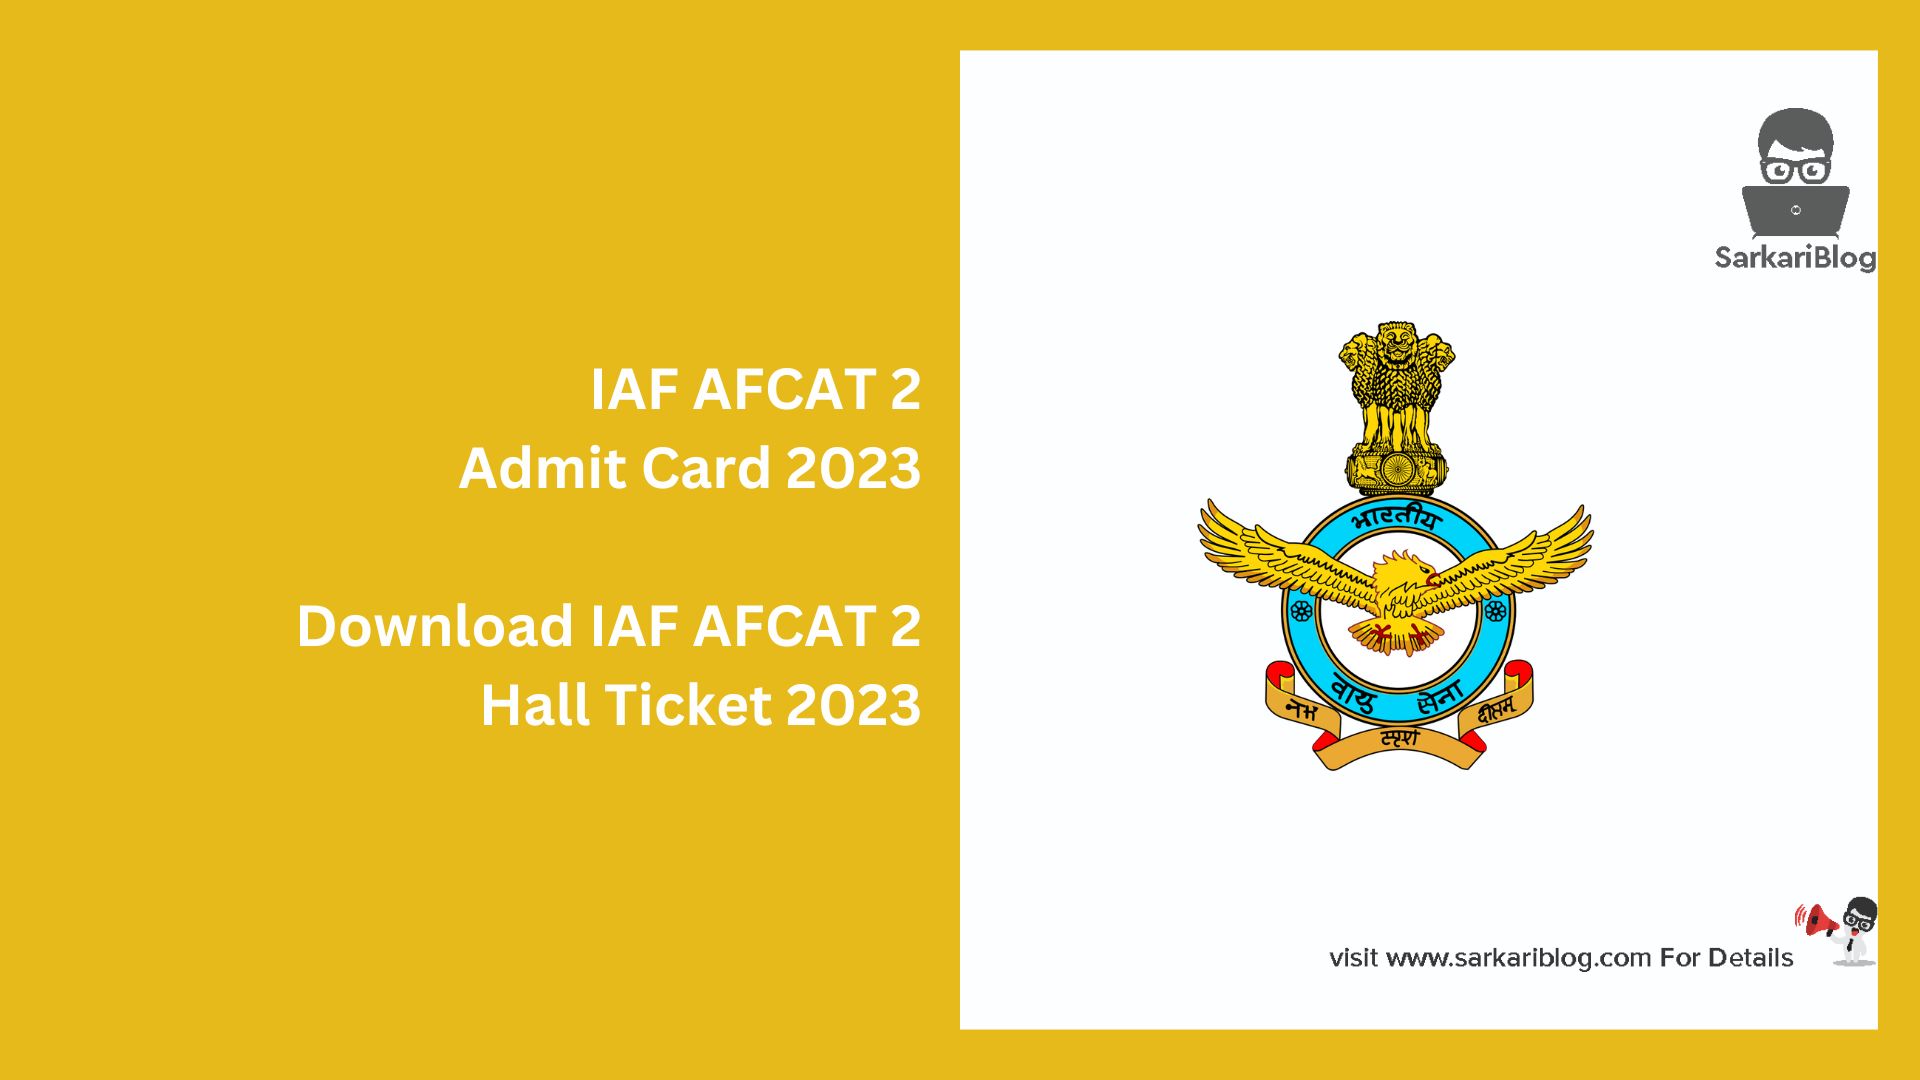 IAF AFCAT 2 Admit Card 2023